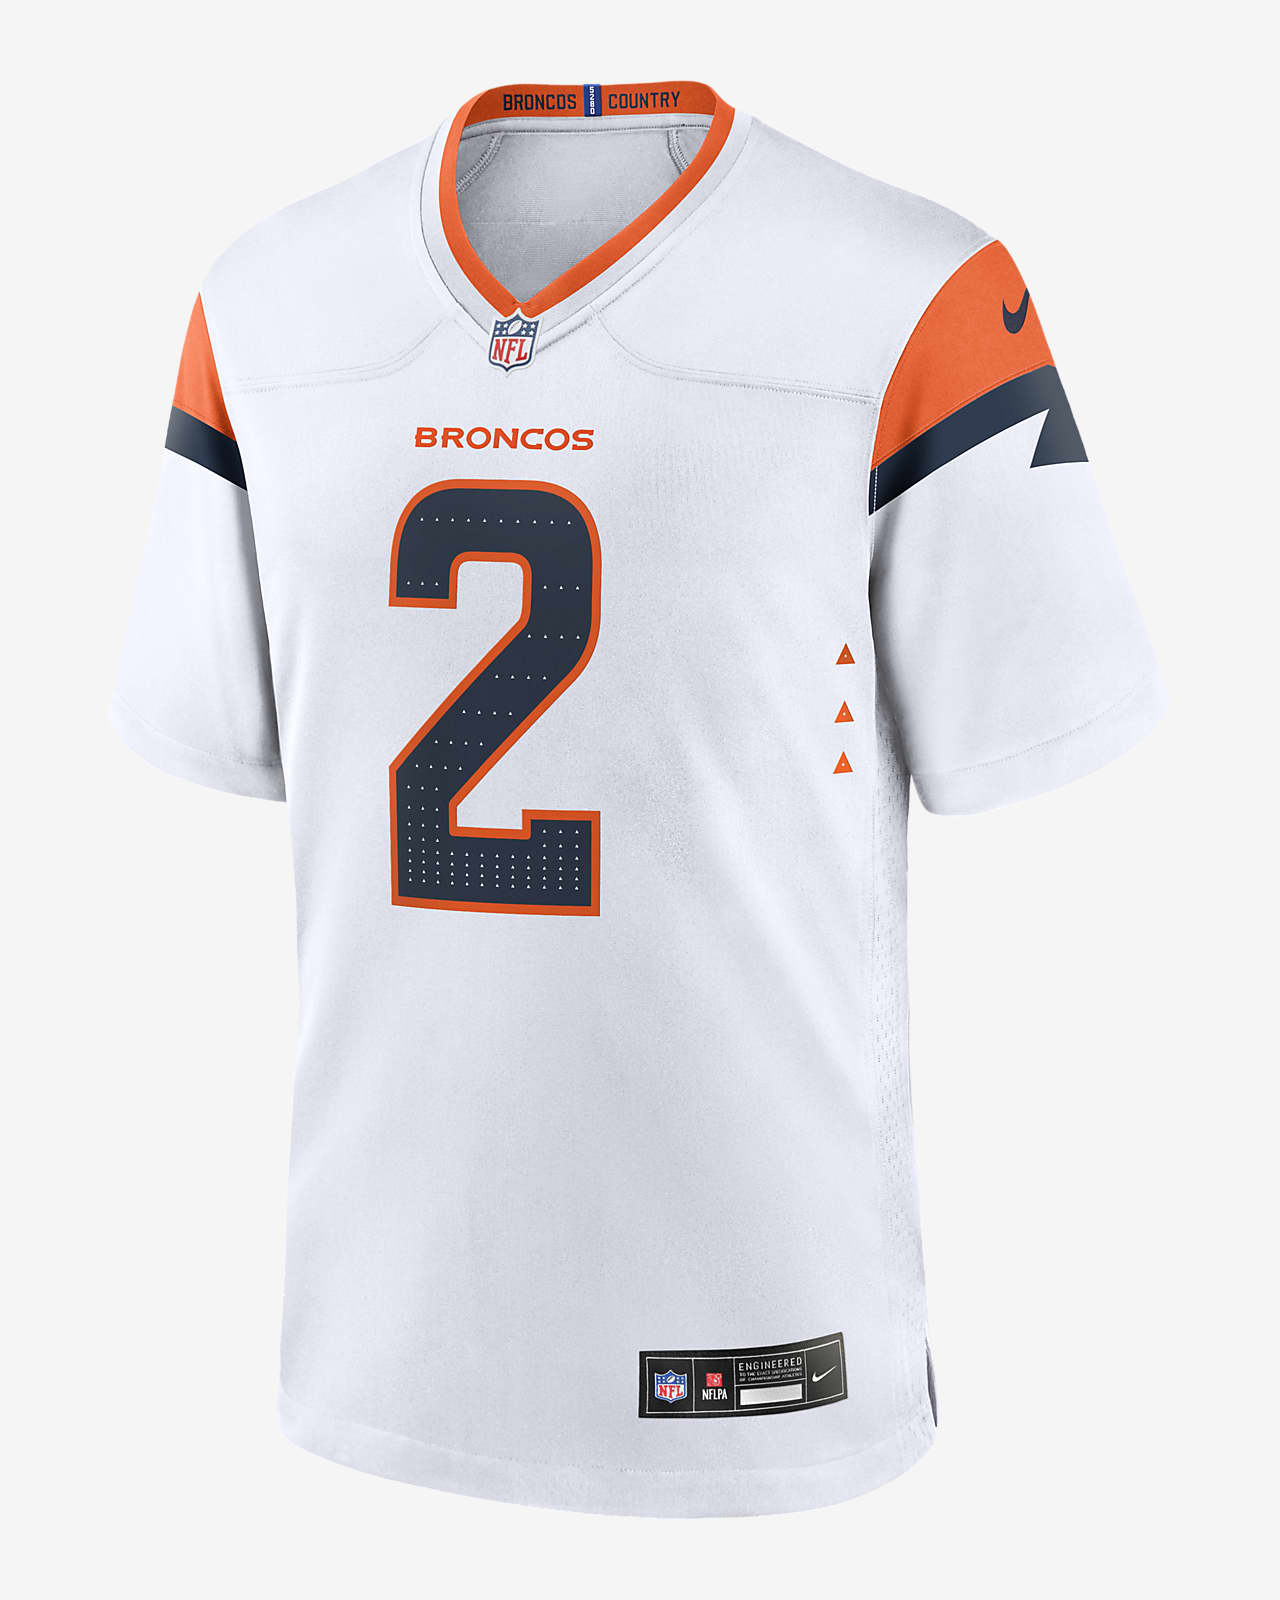 Patrick Surtain II Denver Broncos Men's Nike NFL Game Football Jersey